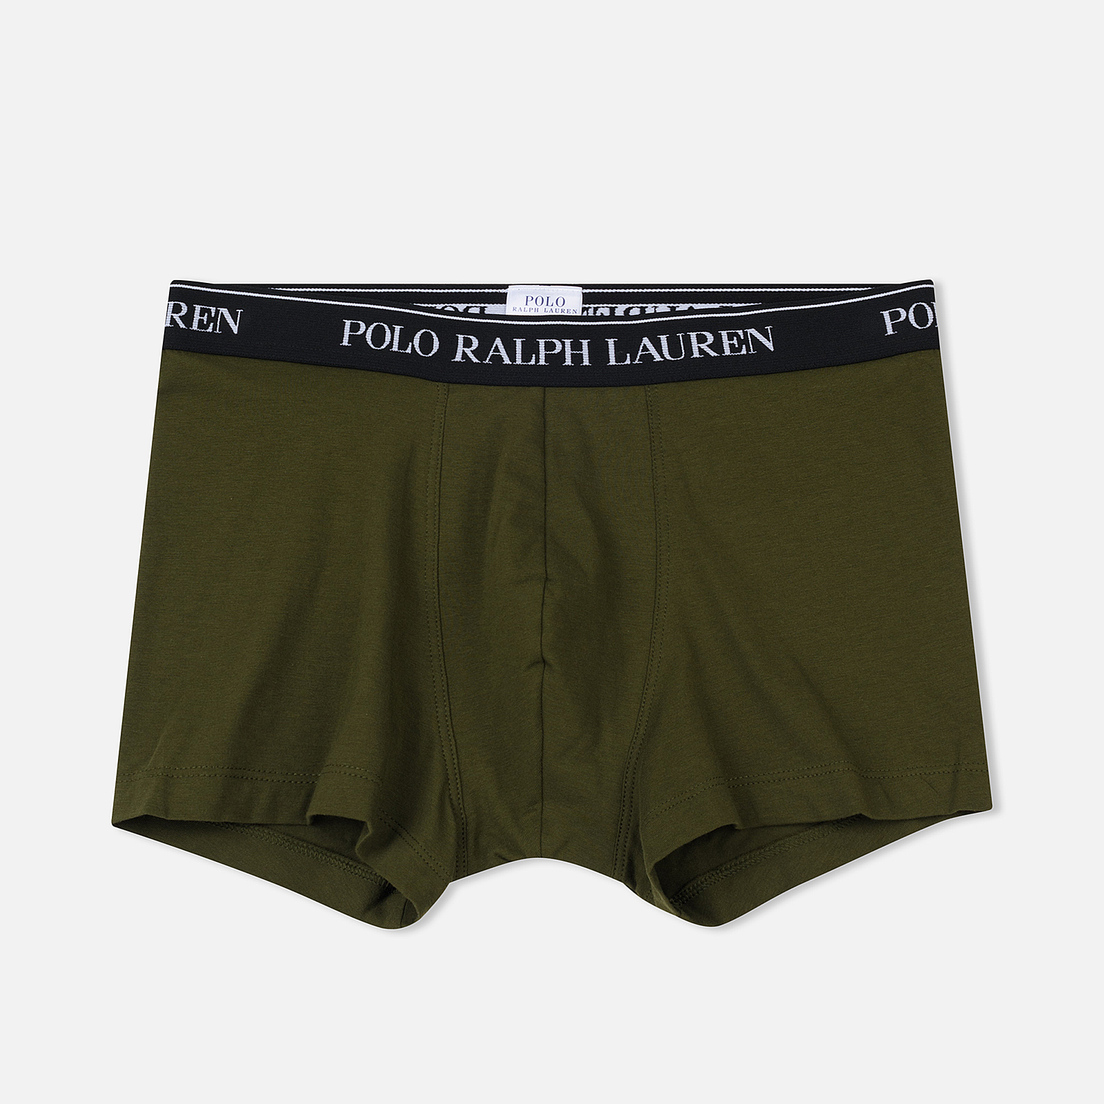 Polo Ralph Lauren Комплект мужских трусов Classic Trunk 3-Pack